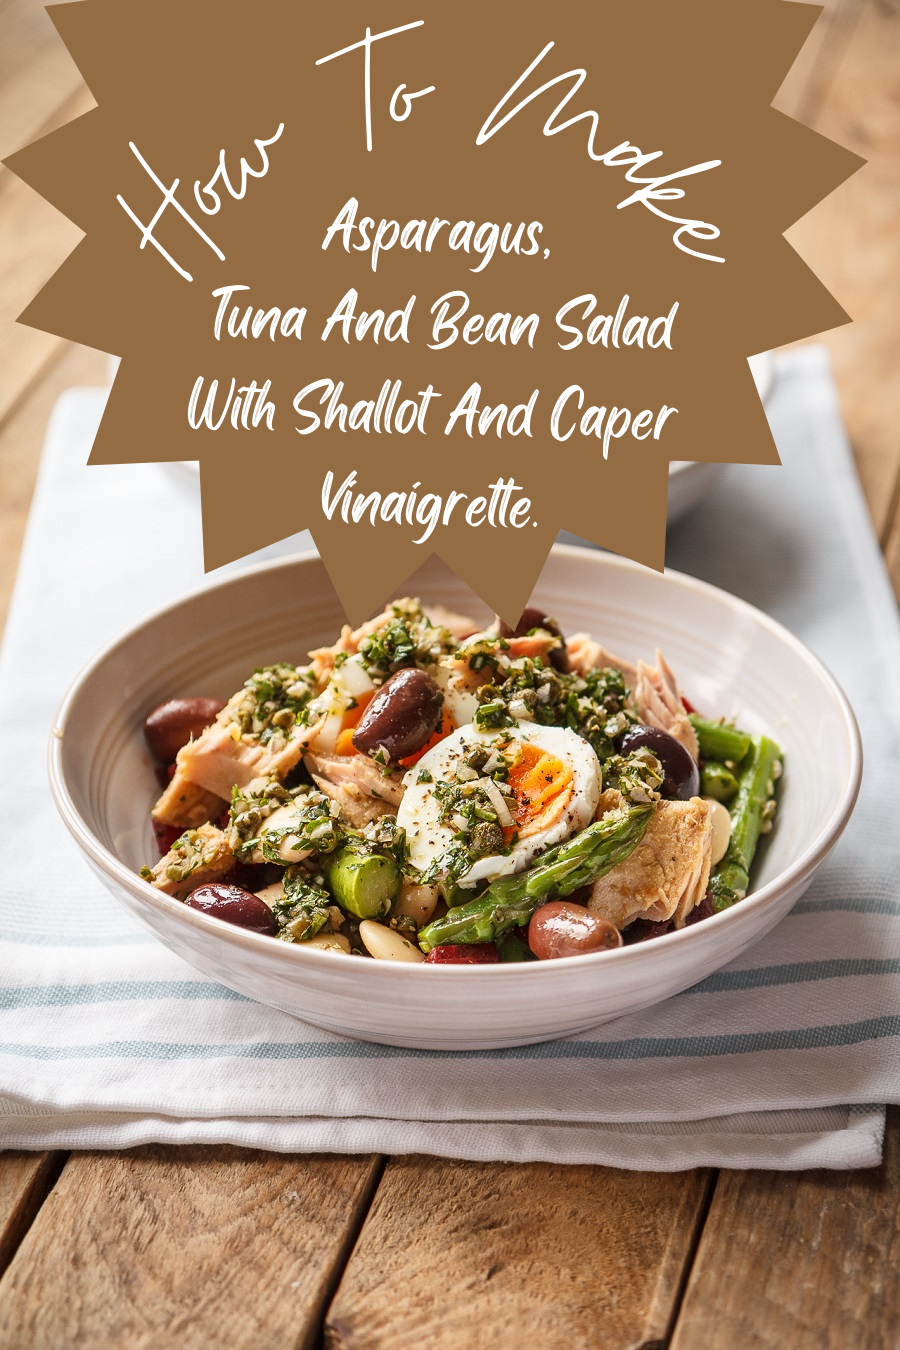 Asparagus, Tuna And Bean Salad With Shallot And Caper Vinaigrette. 